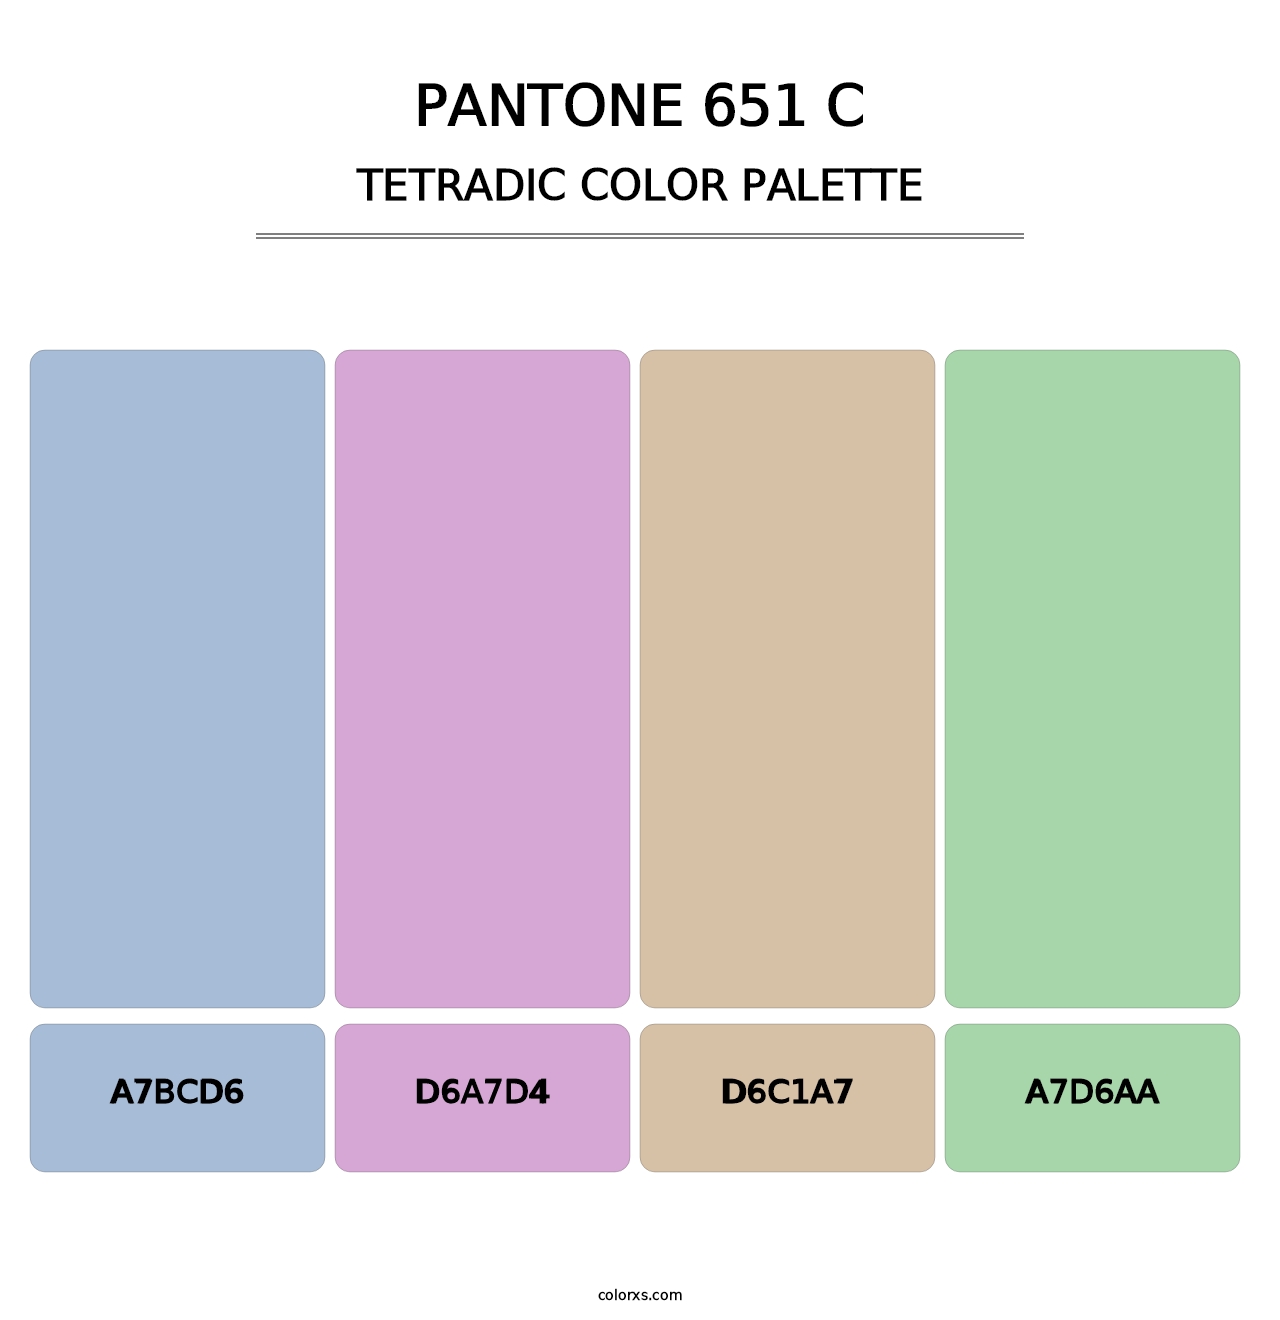 PANTONE 651 C - Tetradic Color Palette